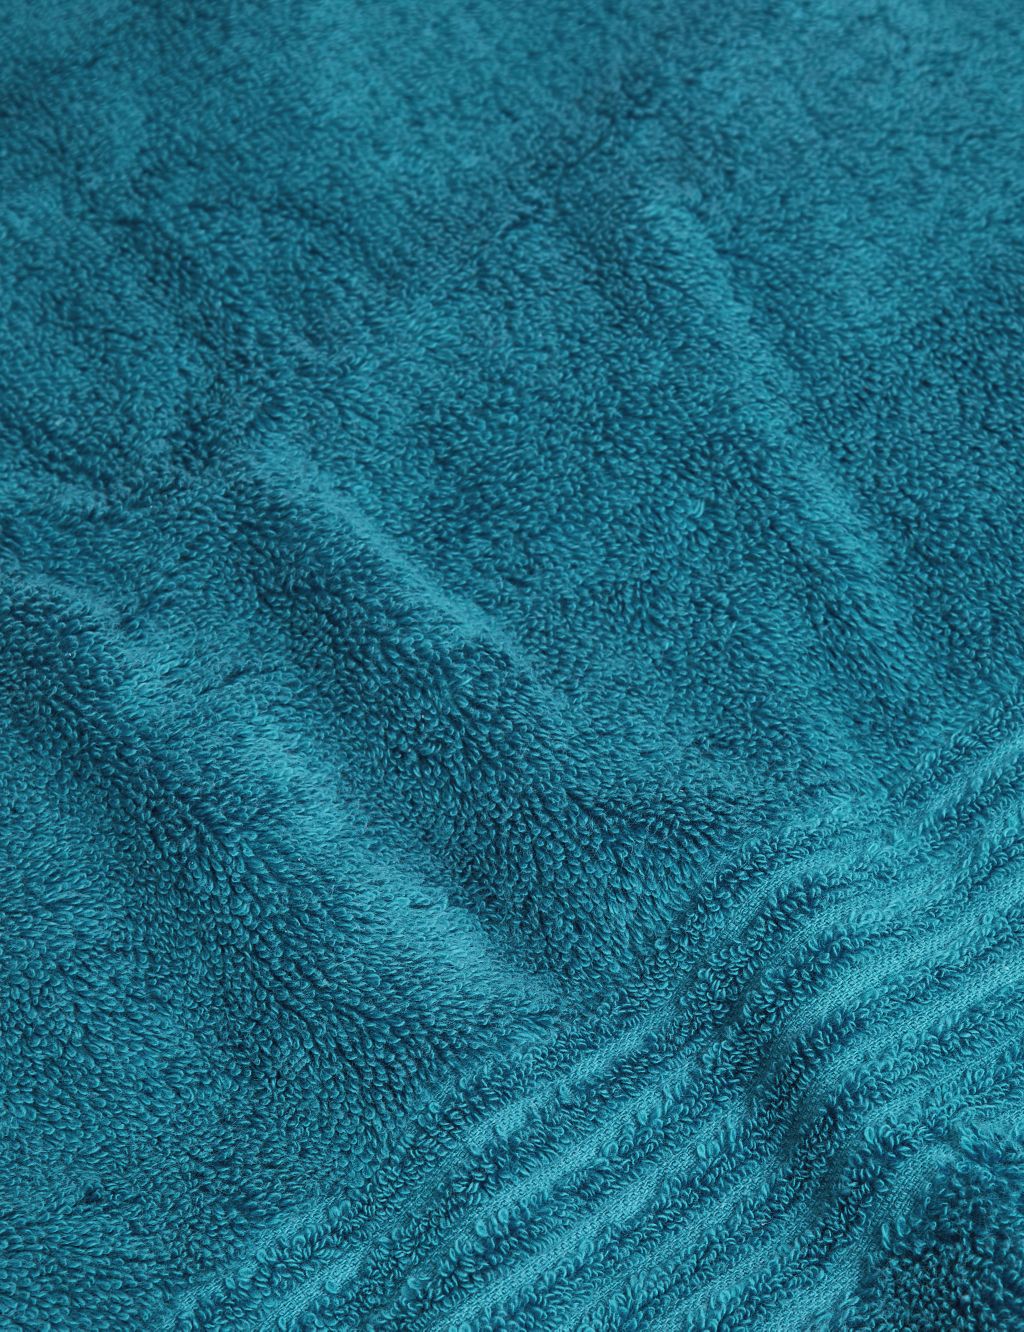 Egyptian Cotton Luxury Towel image 6